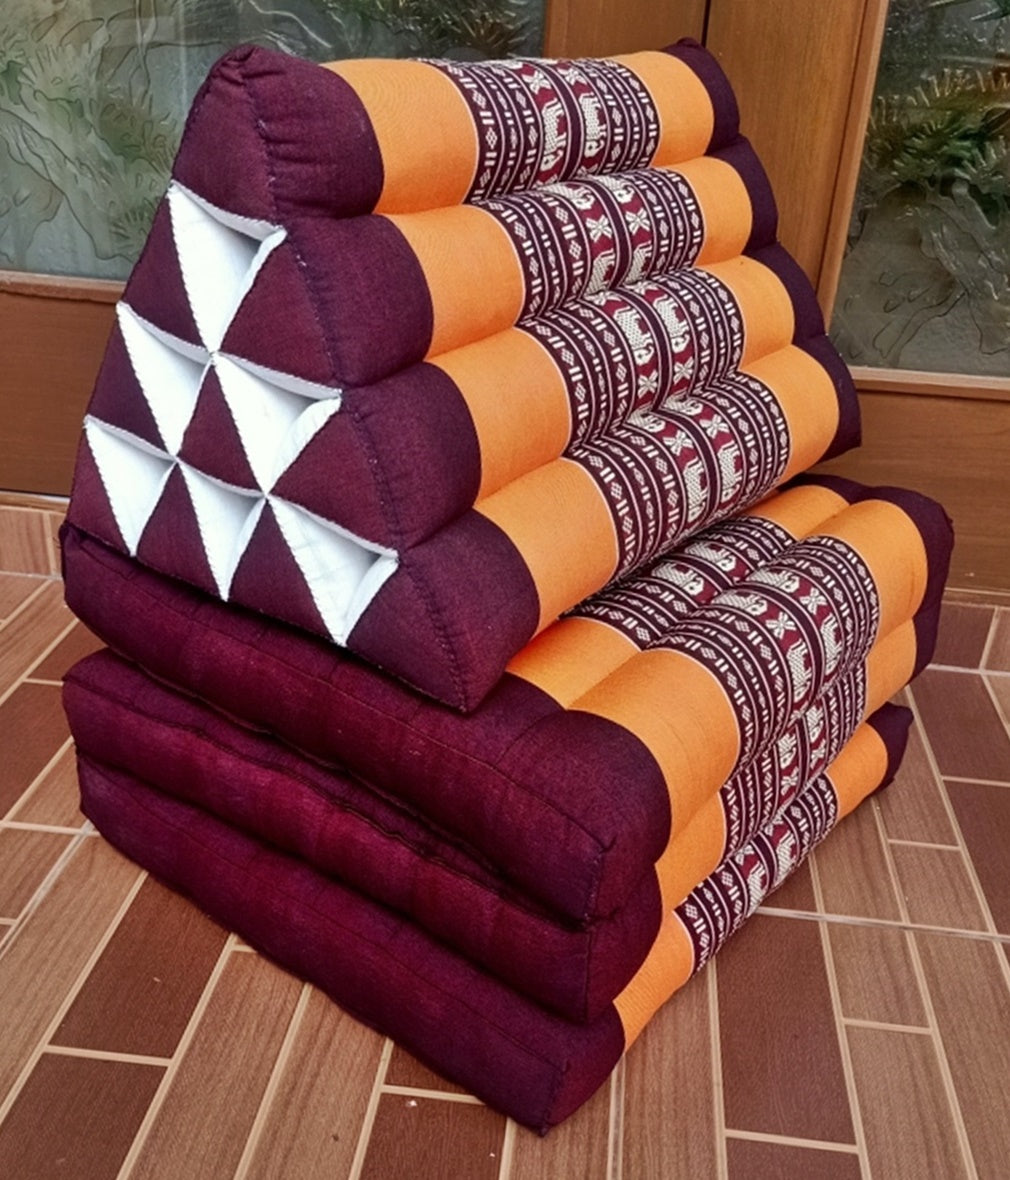 Free shipping to ASIA, 3 fold Elephant printed kapok floor cushion, Thai triangle cushion, 3 fold cushion, 52x162cm(20x64in), kapok cushion, floor cushion, Thailand pillow cushion